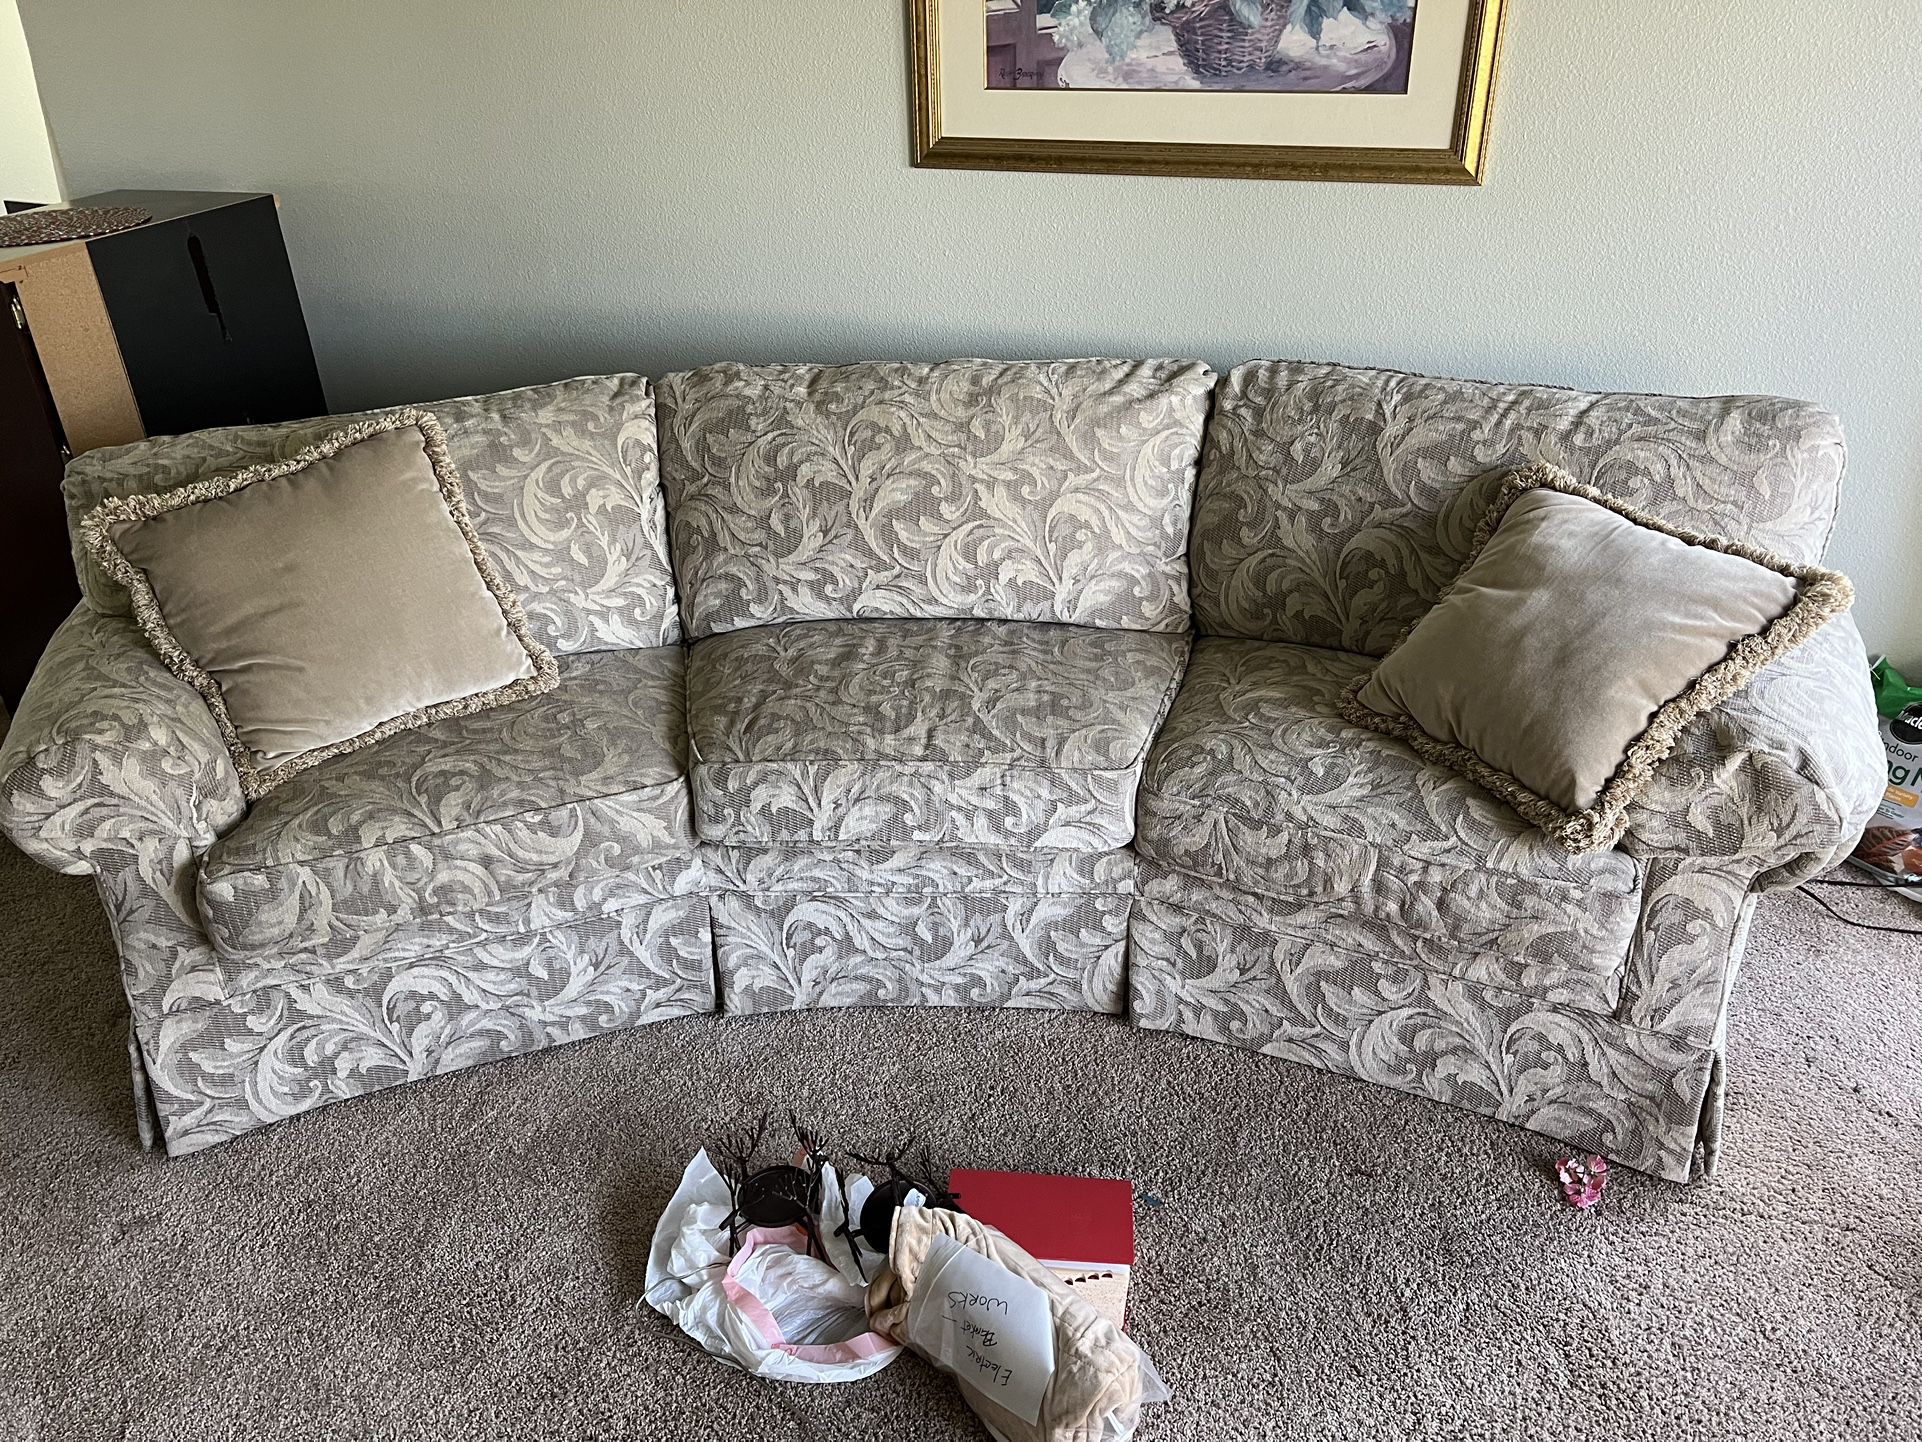 Flexsteel Conversation Sofa/Couch